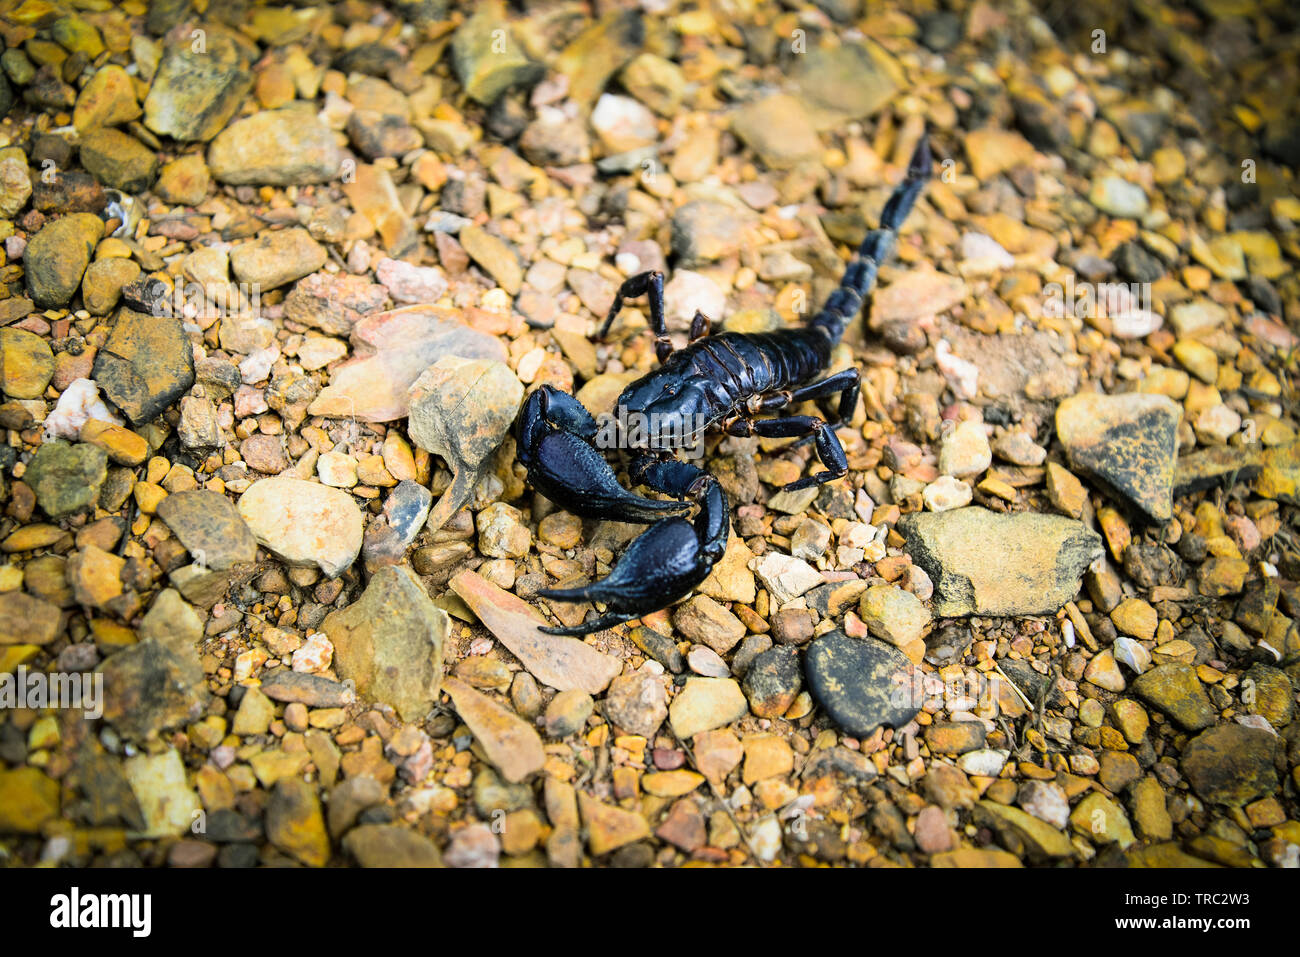 The black Emperor Scorpion dead on the rock ground / Pandinus imperator Stock Photo